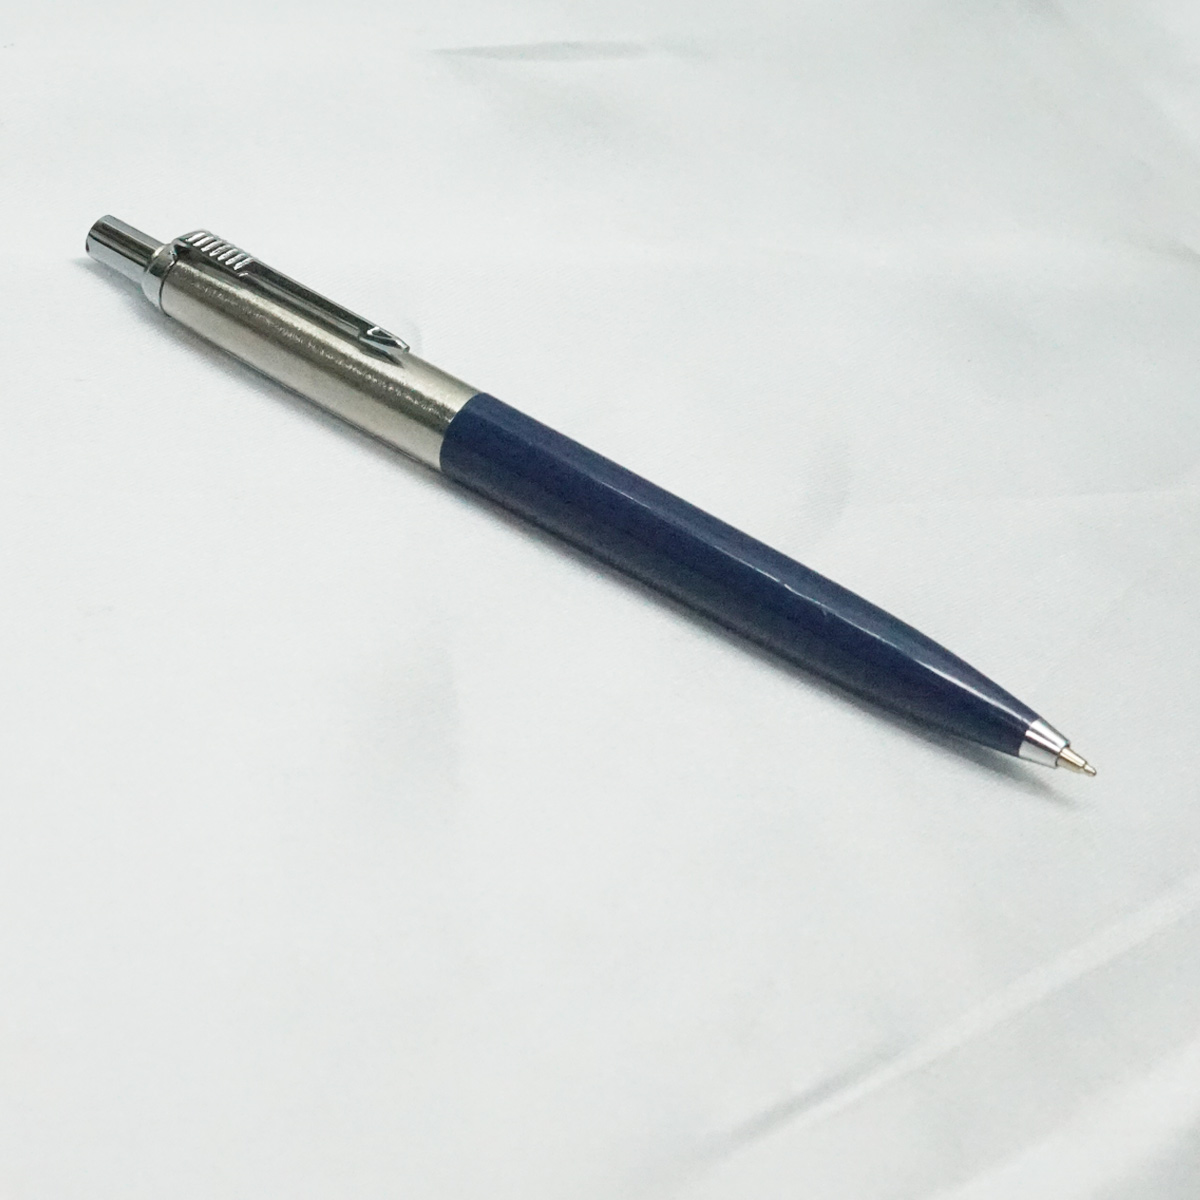 Penhouse.in Blue Color Body With Silver Clip Fine Tip Retractable Ball Pen SKU 21967